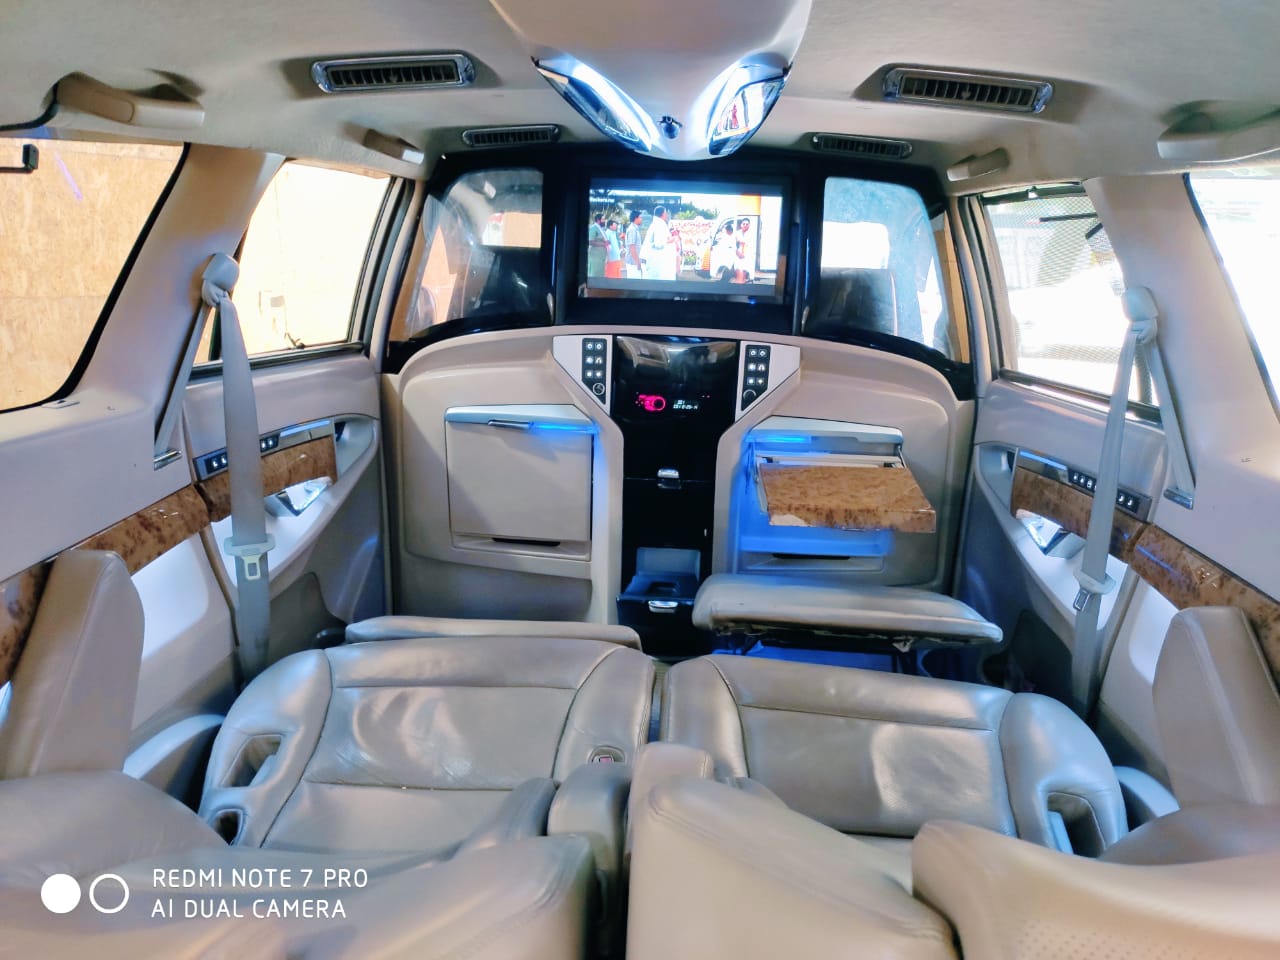 Toyota Innova 2015 2.5G 7 Seater Interior Car Photos - Overdrive